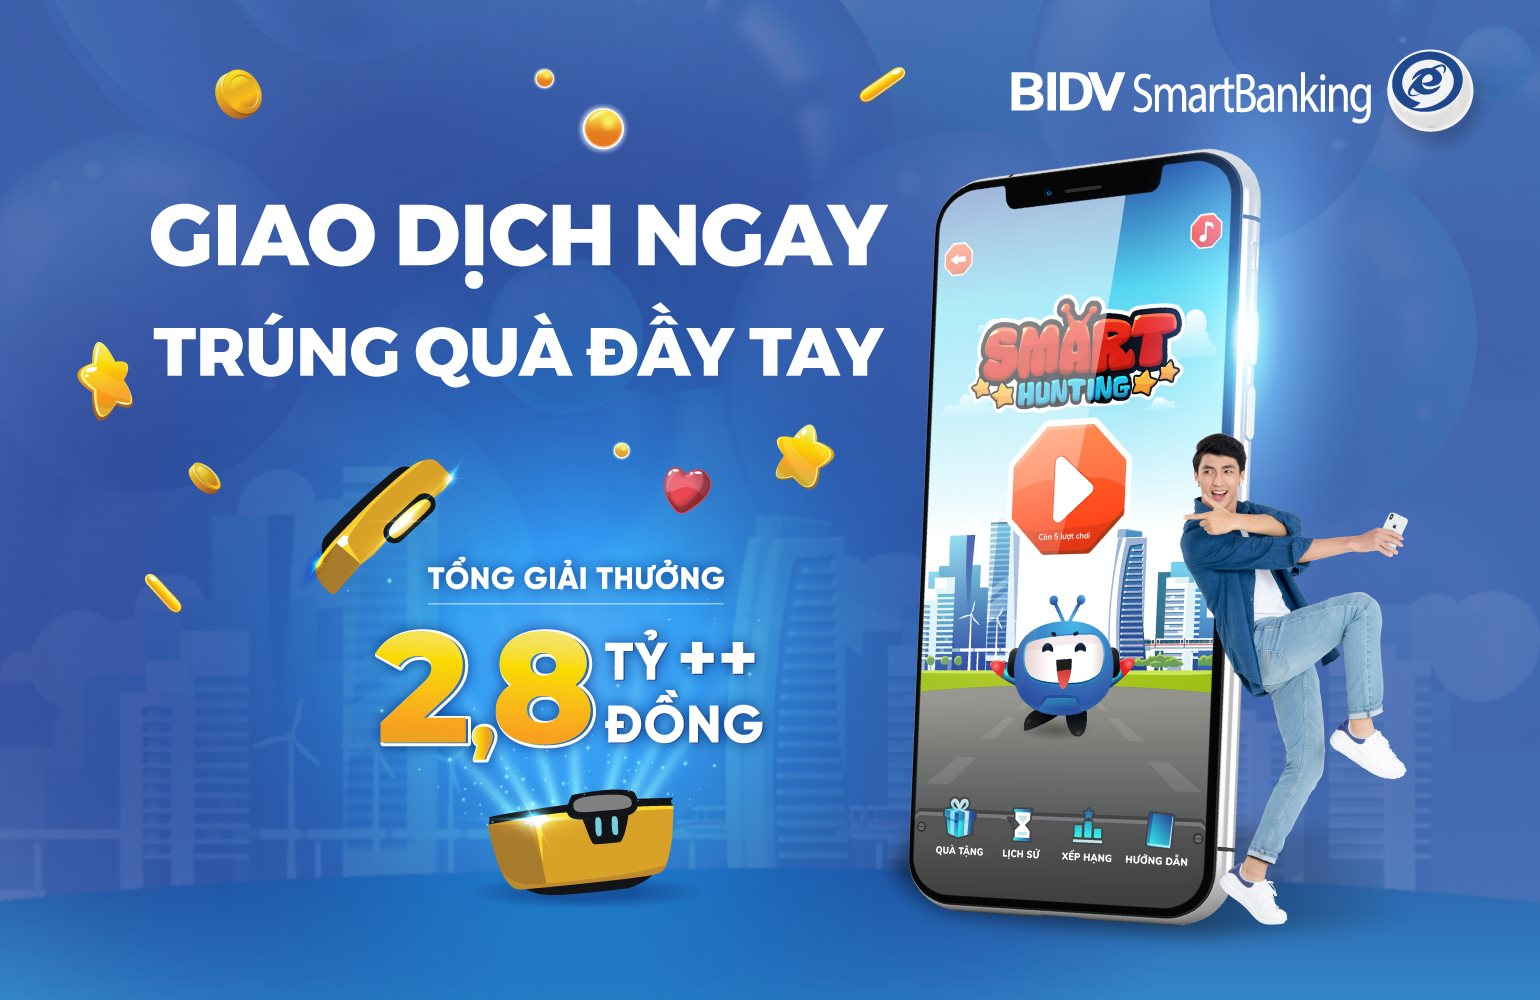 bidv-smarthunting-app-pop-up-1540x1000.png